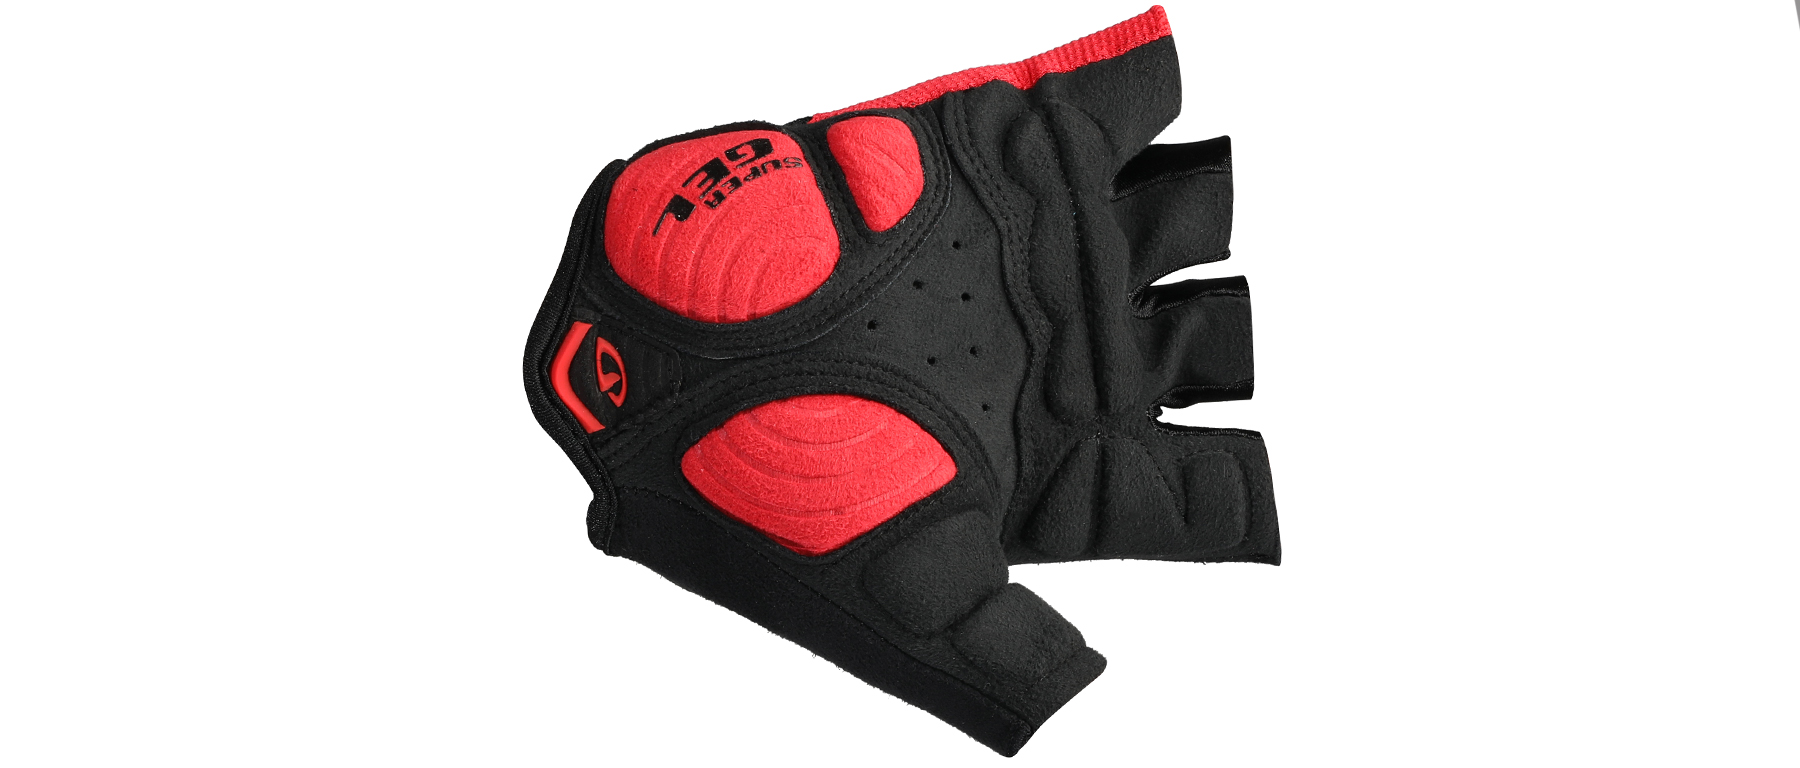 Giro Strade Dure Supergel Glove